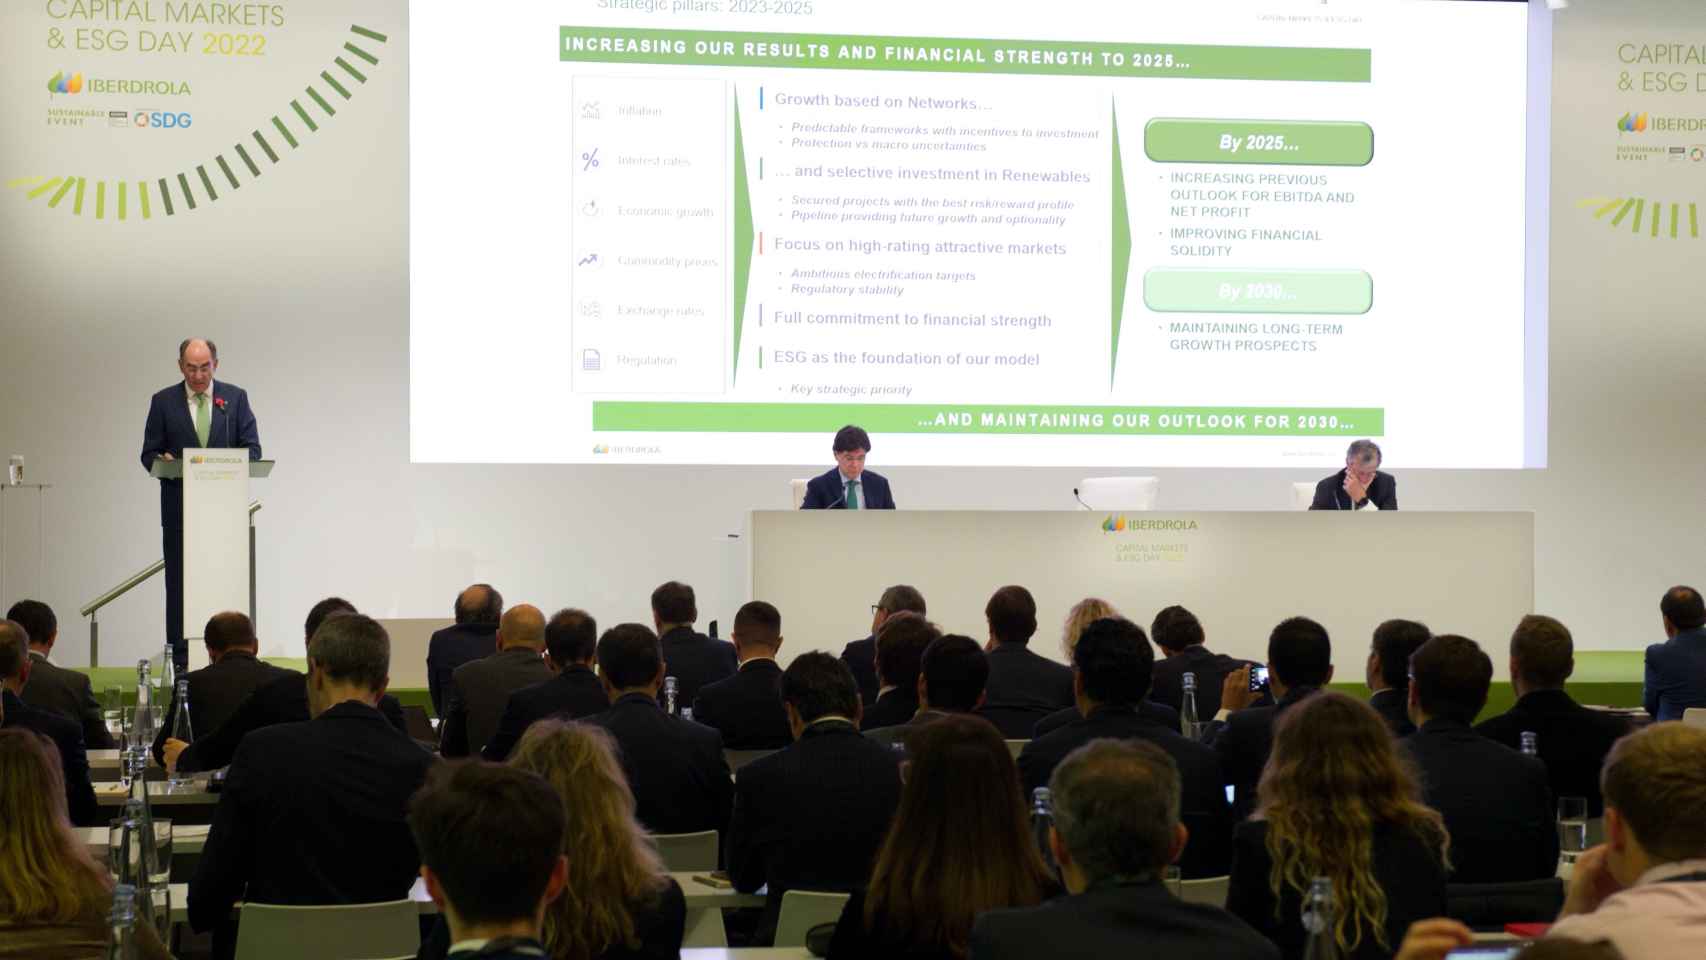 Capital Markets & ESG Day Iberdrola 2022